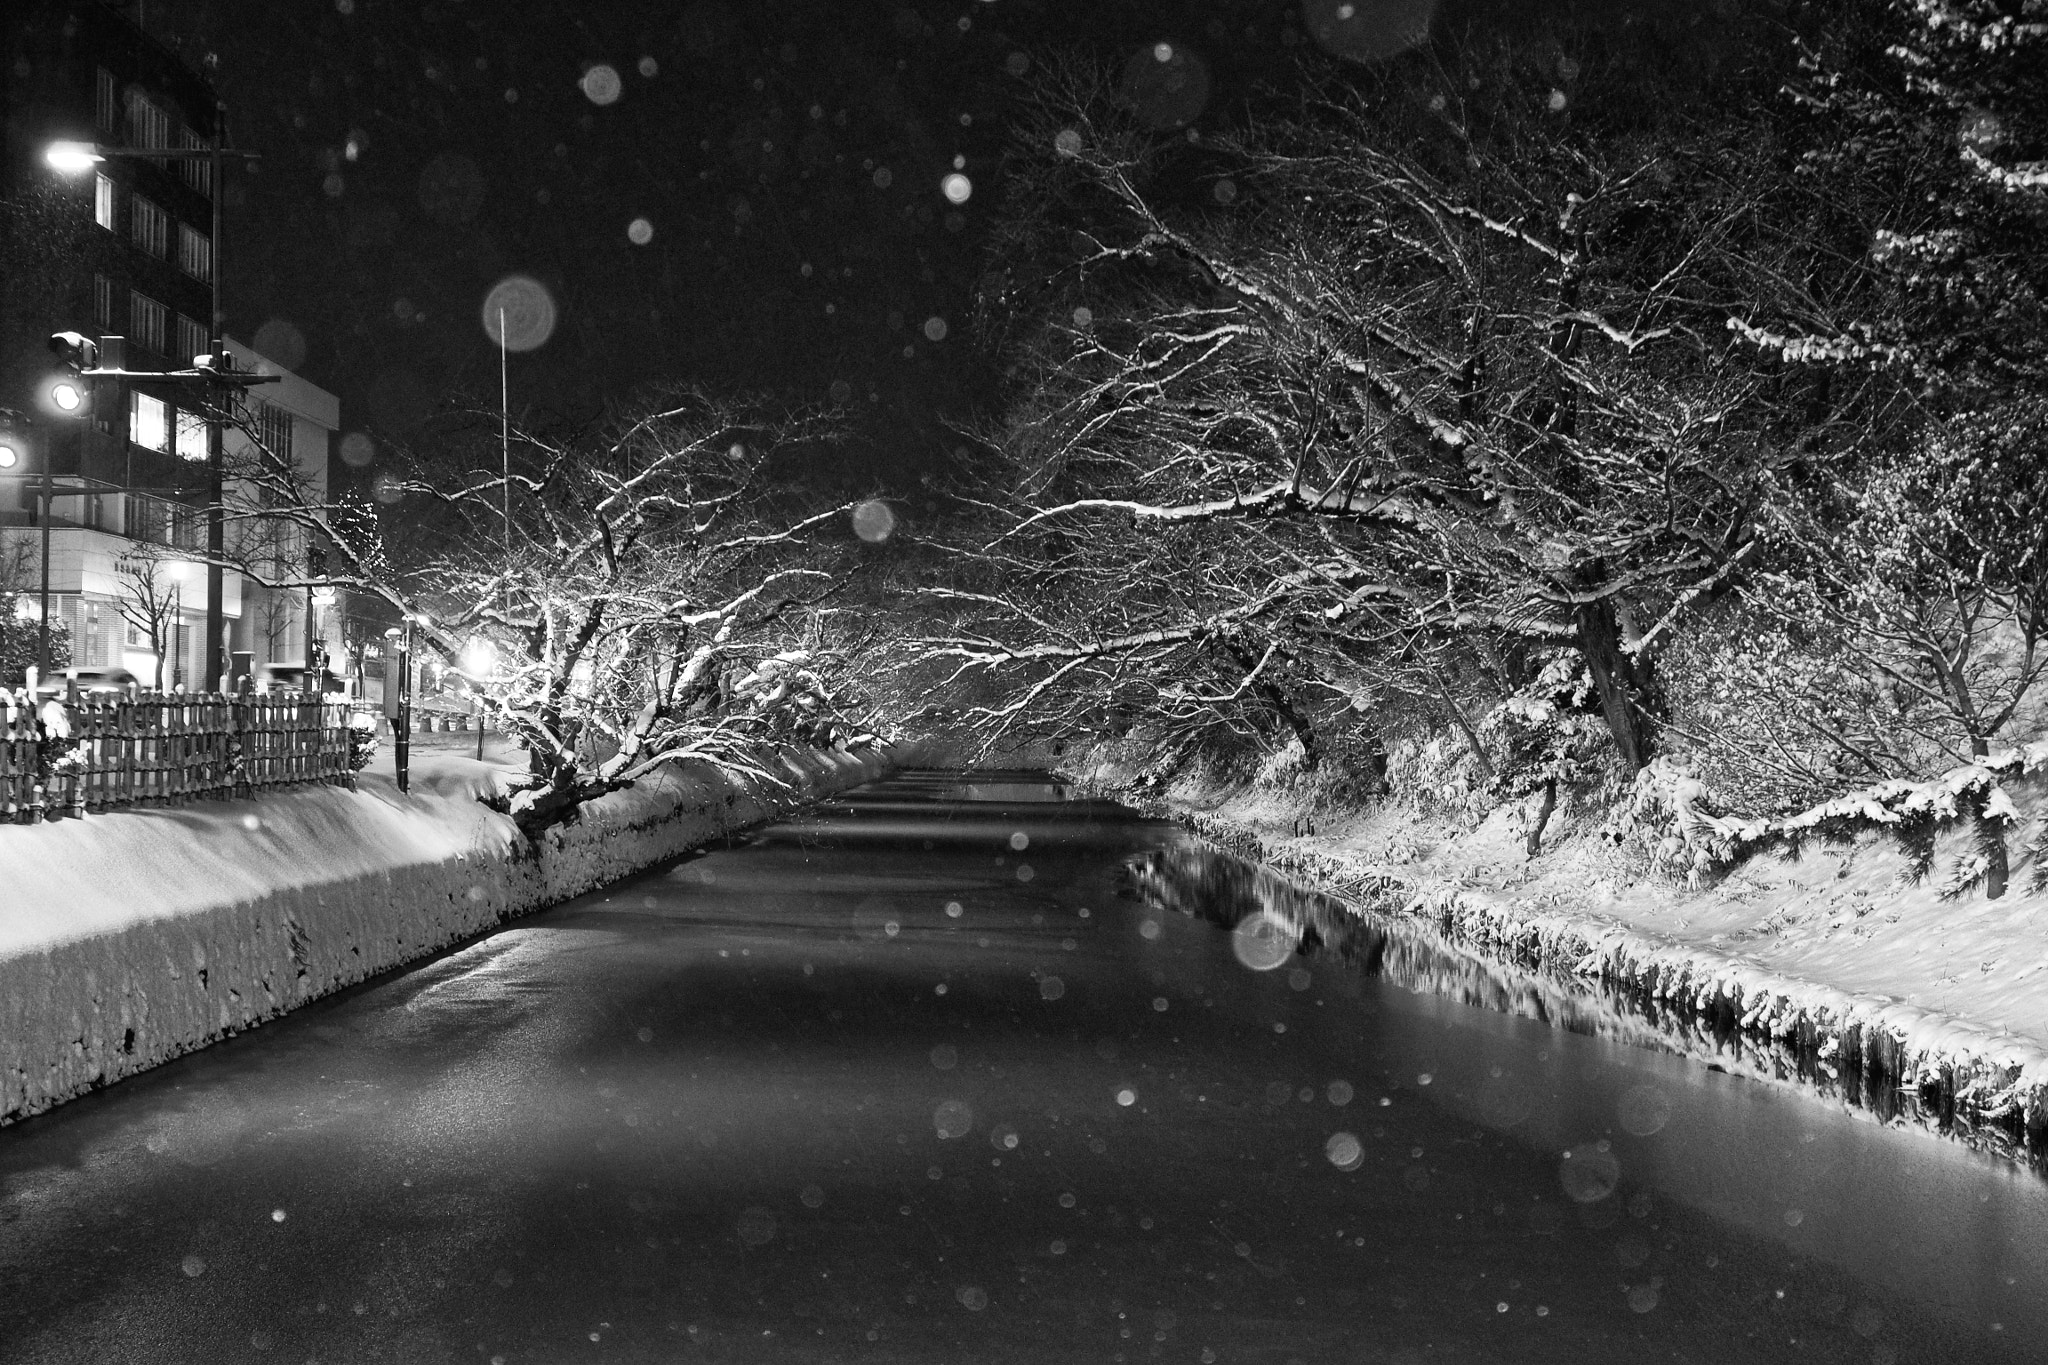 Winter Park by shoji uno on 500px.com